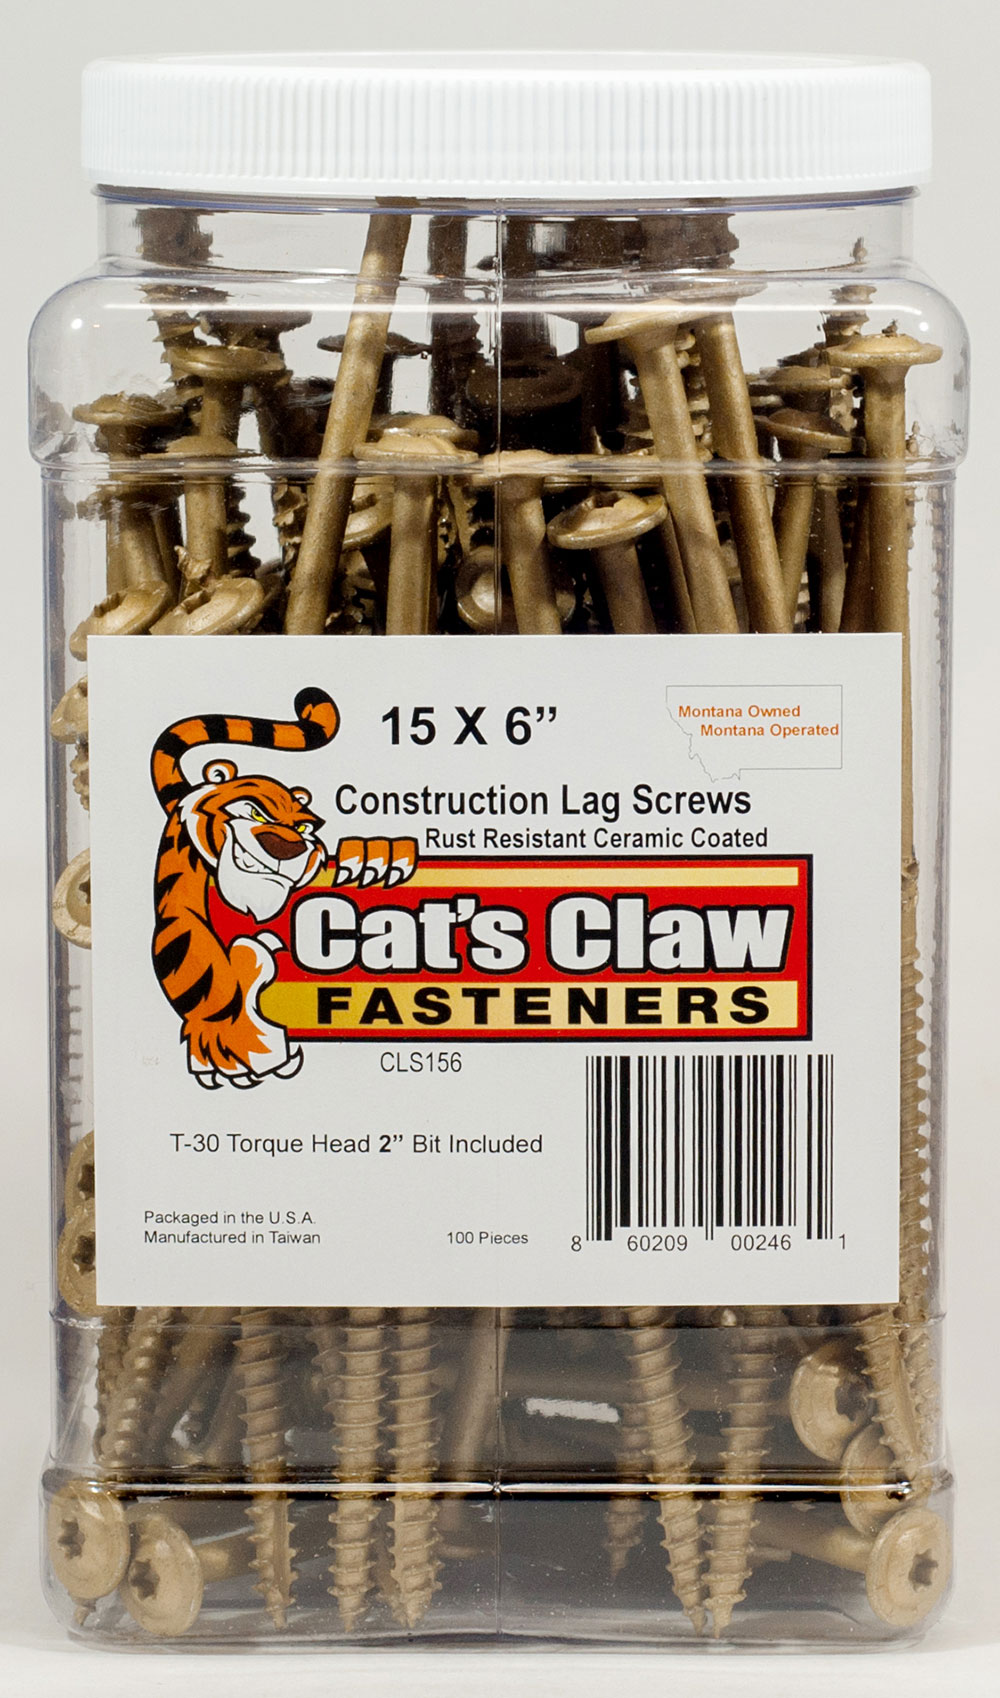 #15 x 5 Construction Lag Screws